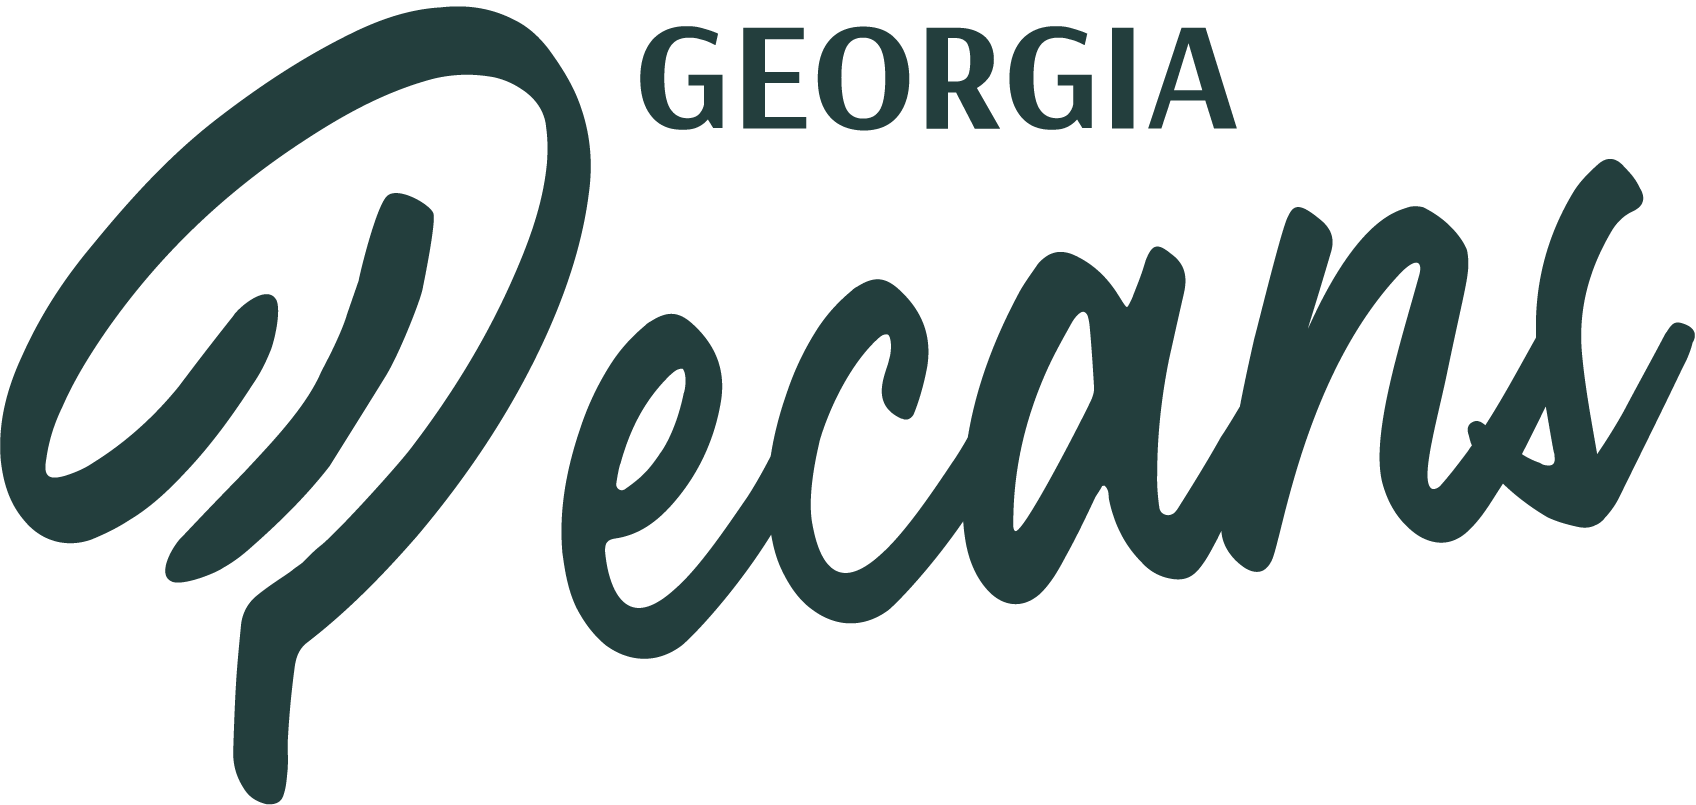 Georgia Pecans_Alternate Wordmark